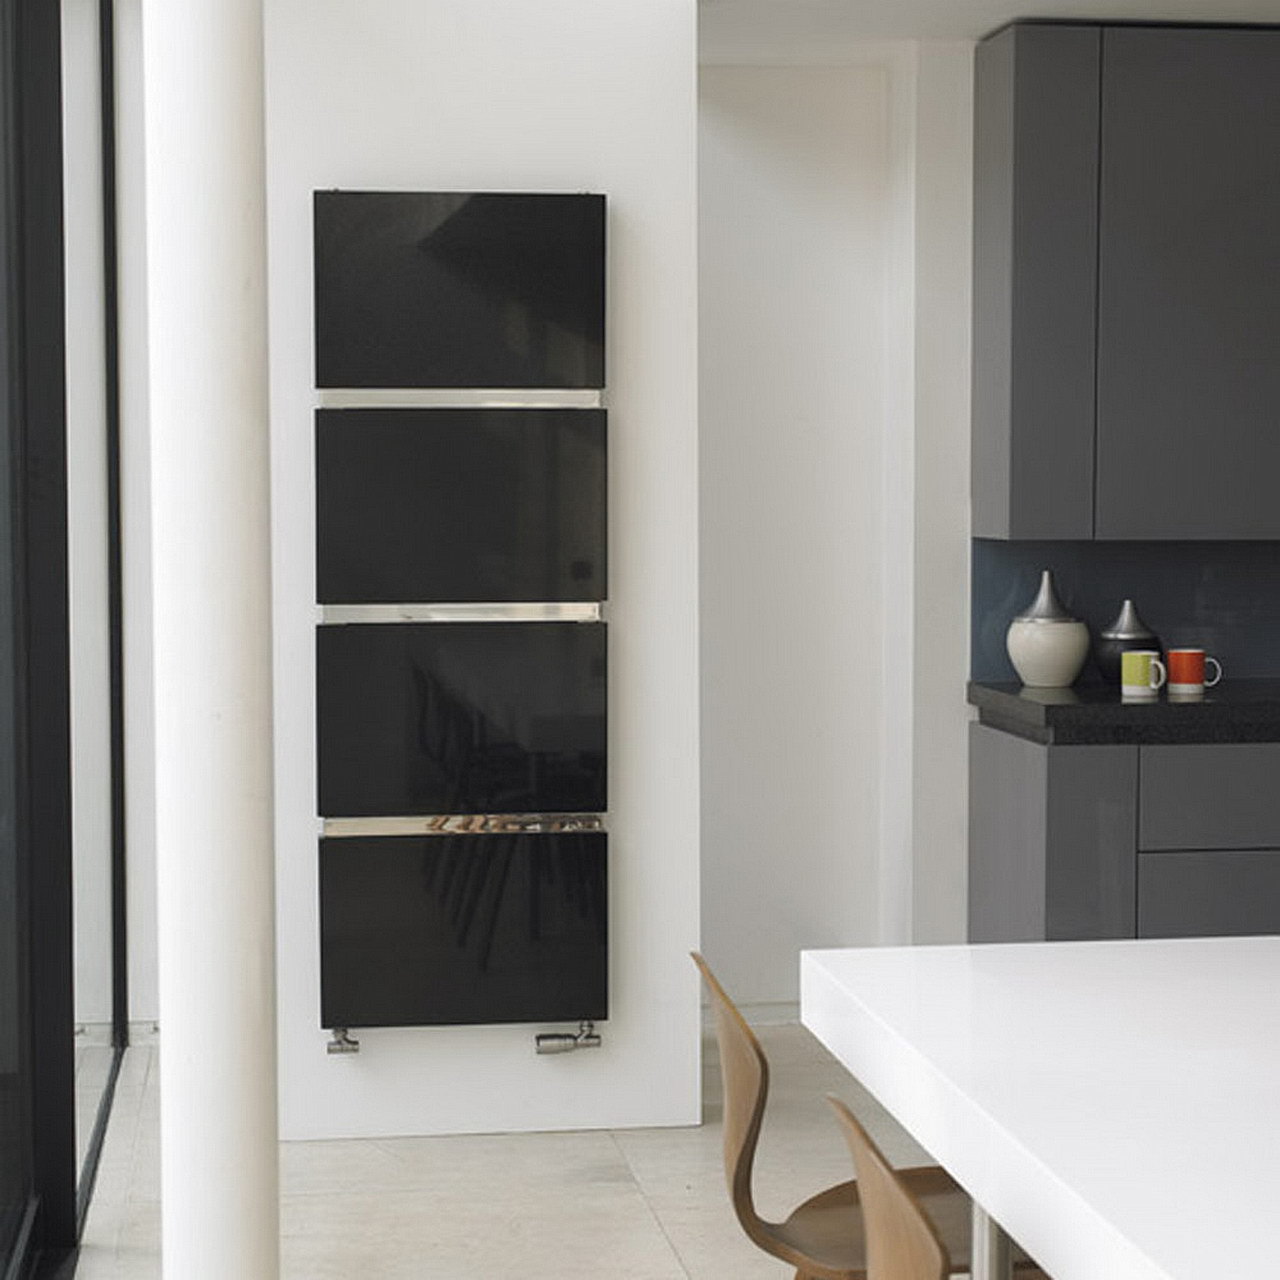 designer kitchen radiators